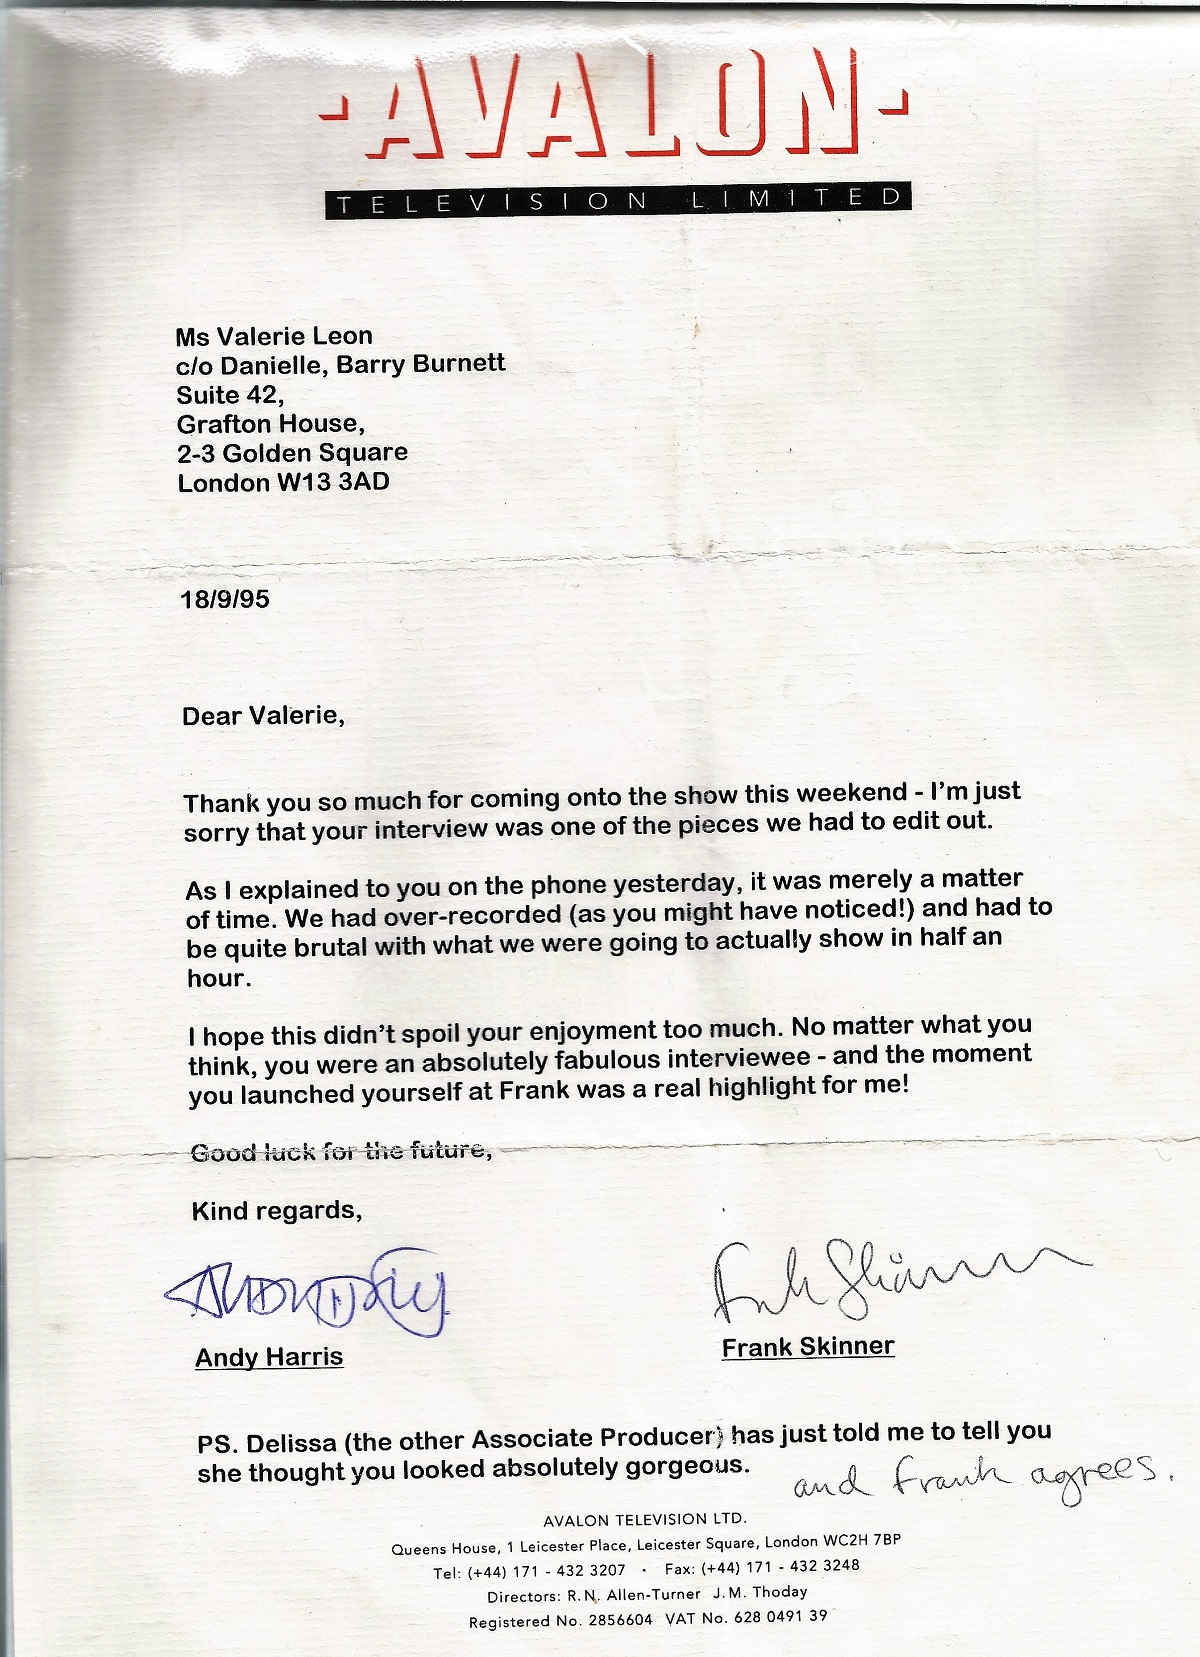 Frank Skinner signature on a letter from Avalon Television Ltd. Letter addressed to James Bond